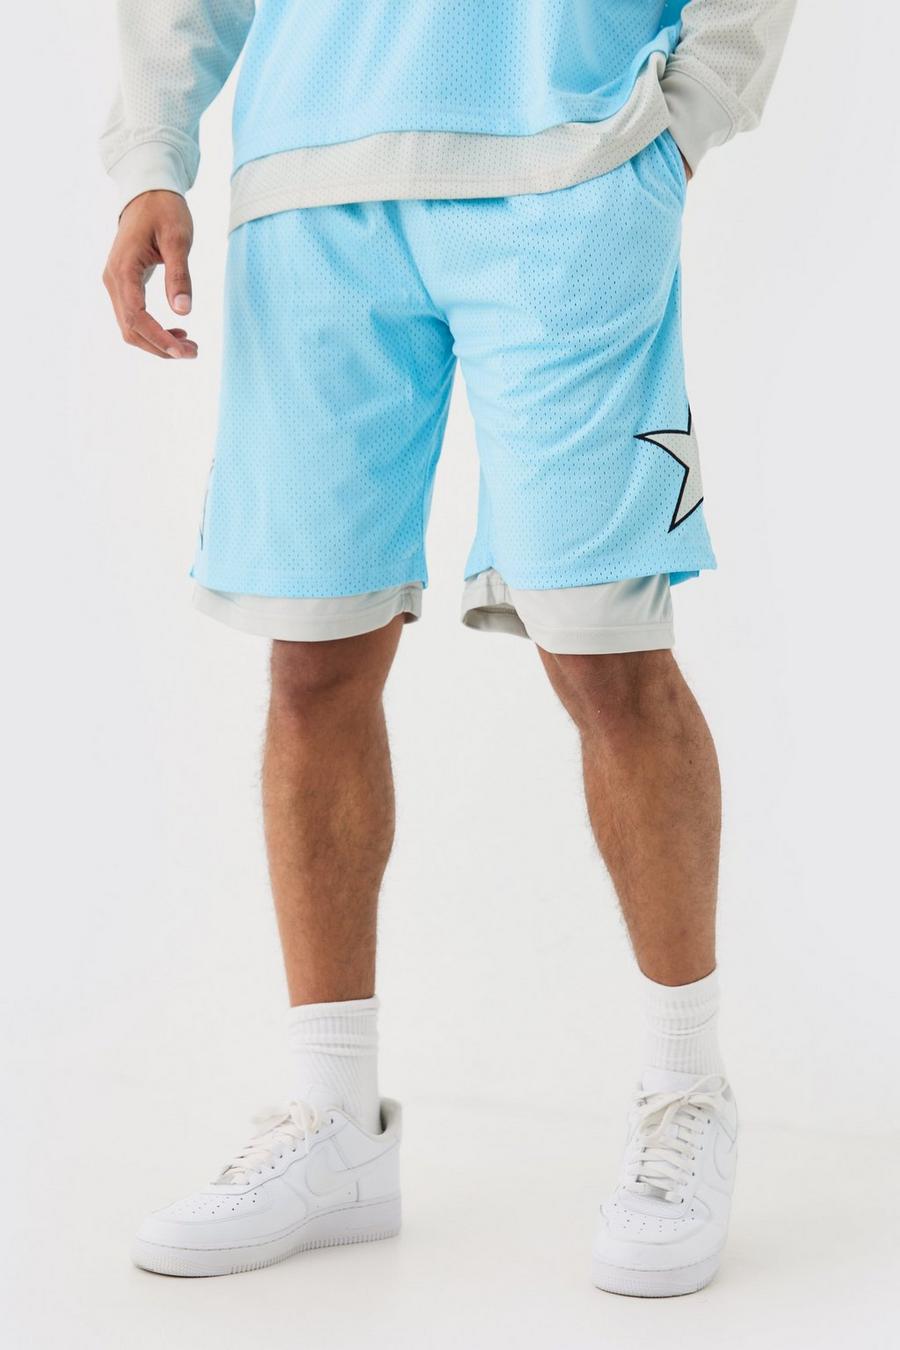 Blue Loose Fit Layered Long Length Basketball Short